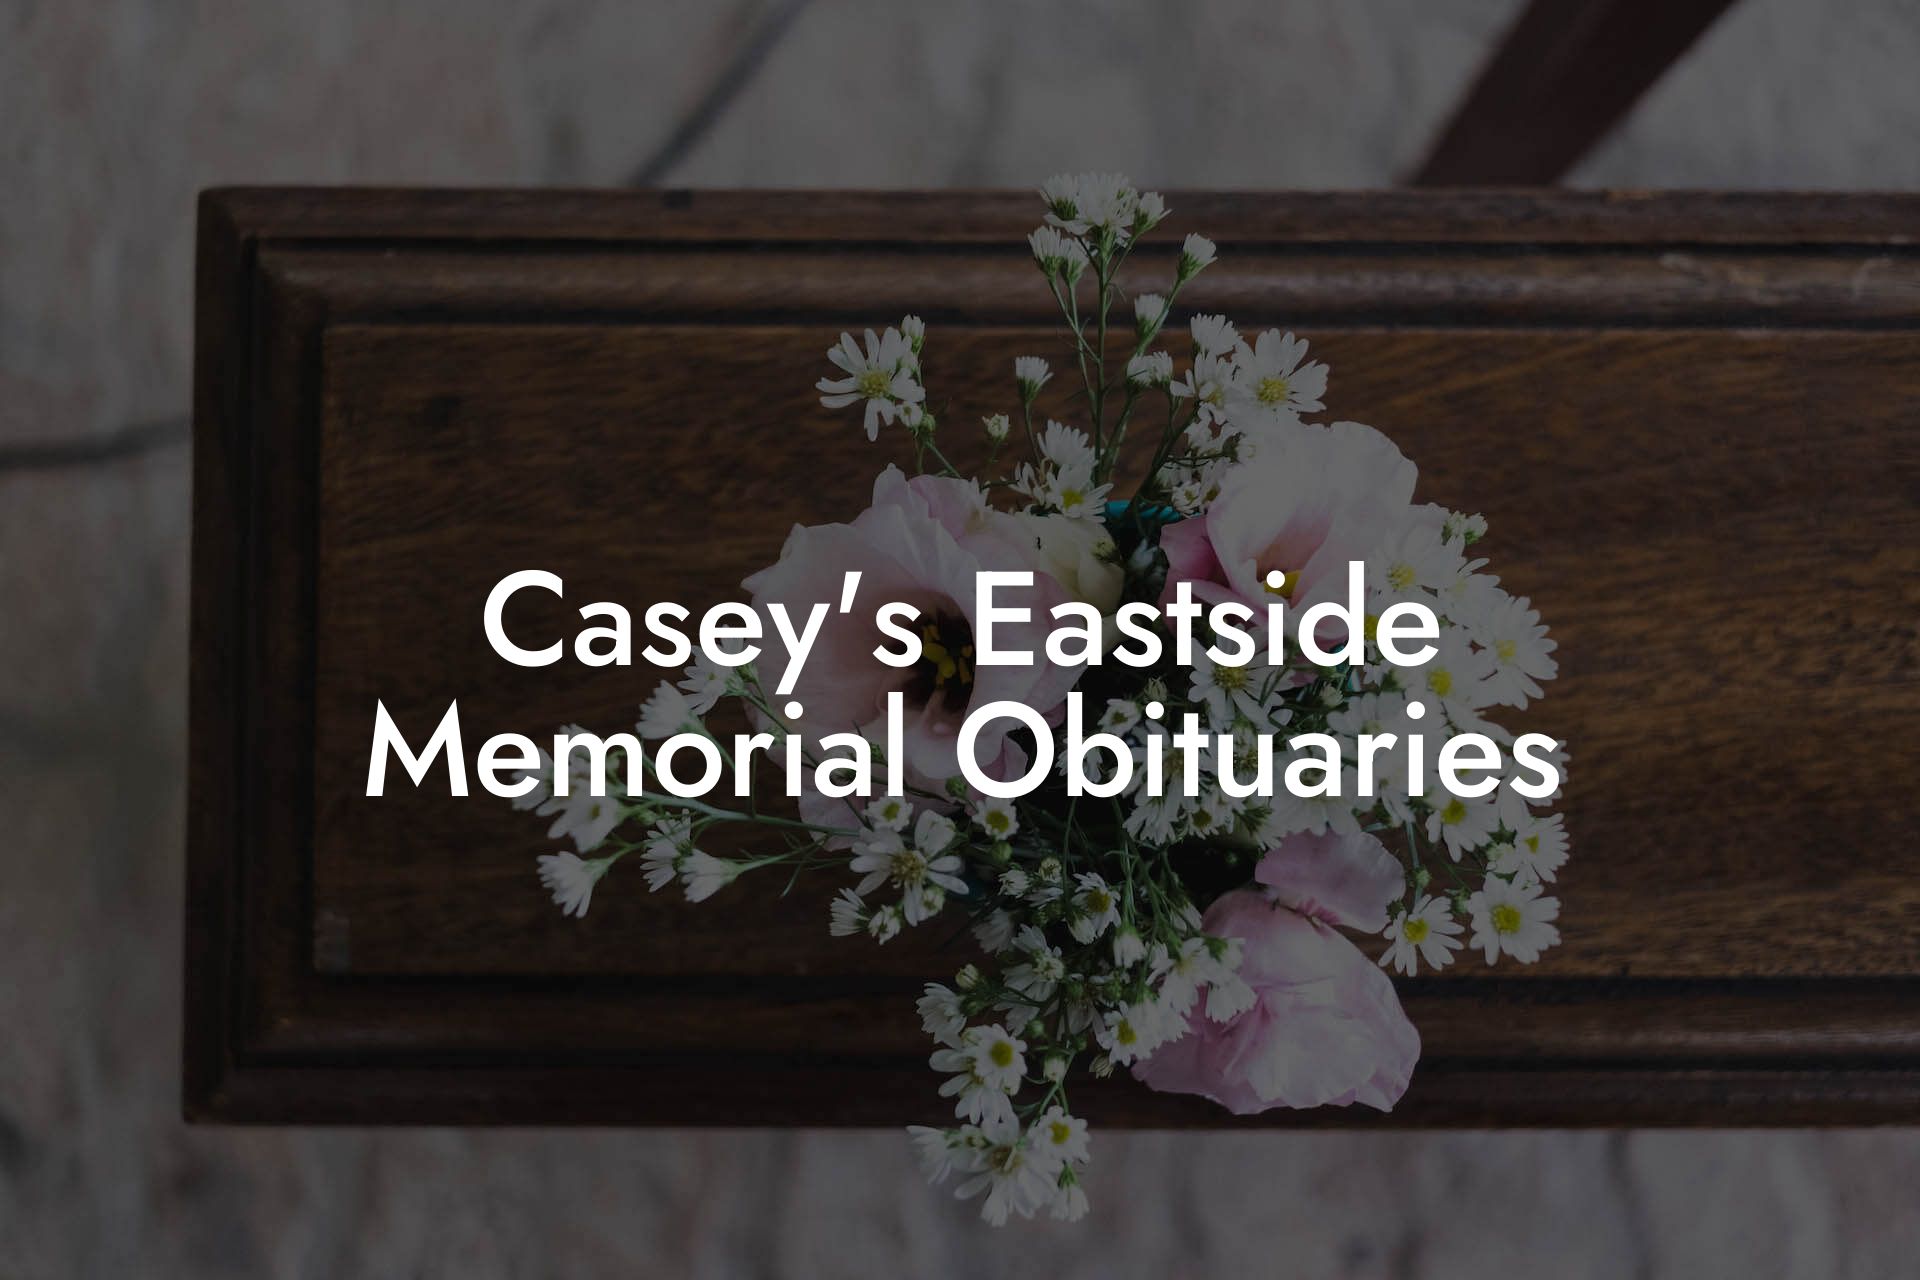 Casey's Eastside Memorial Obituaries